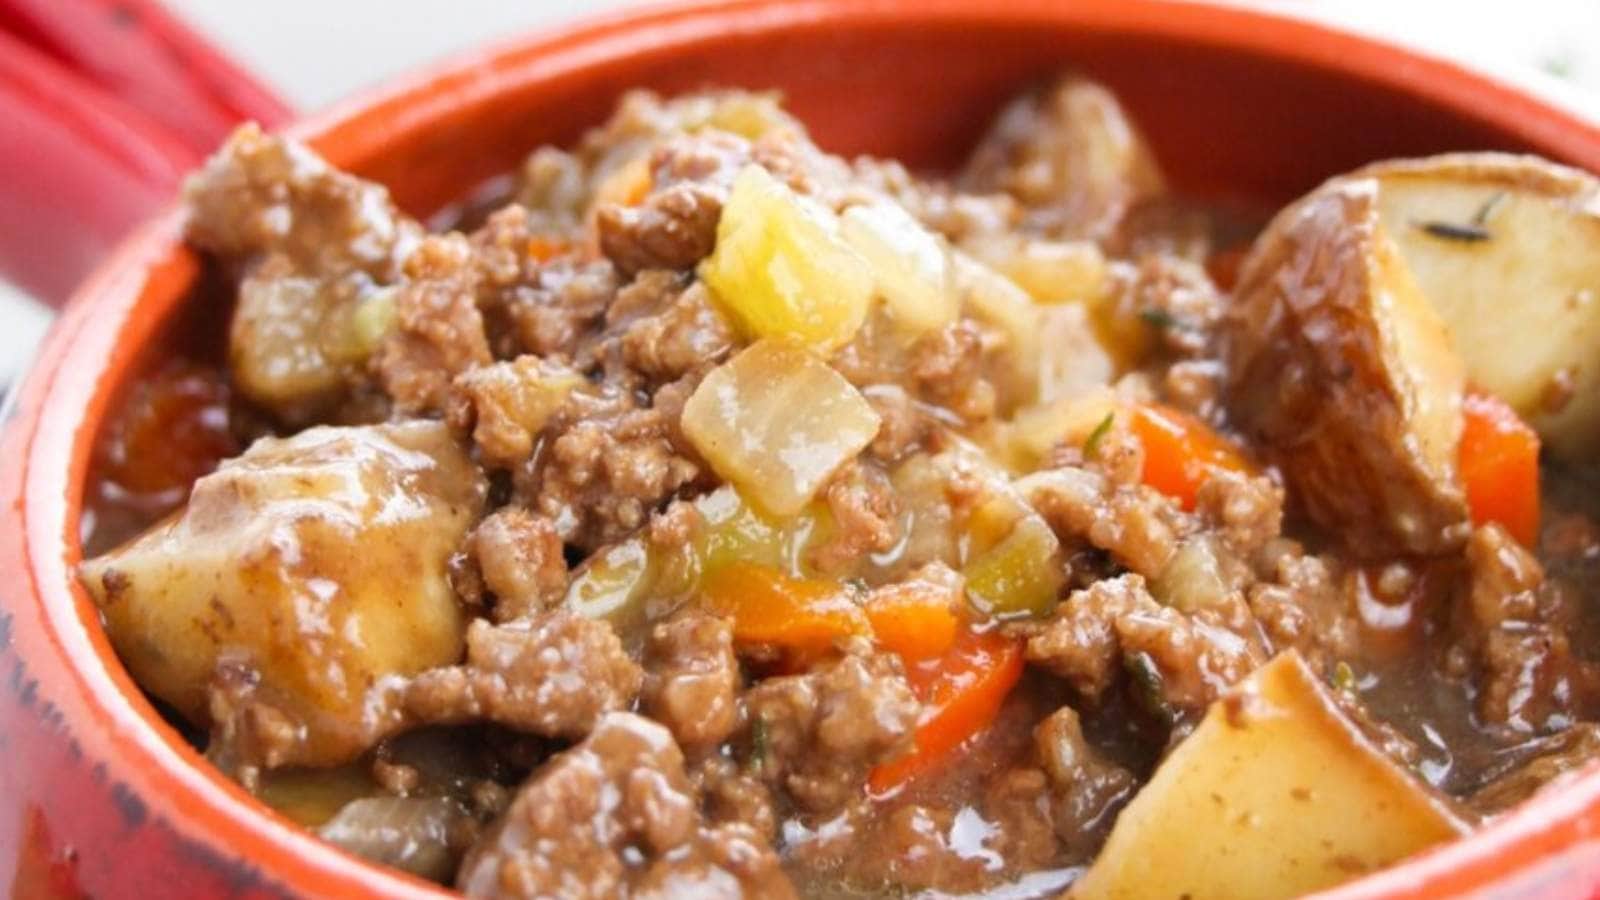 Irish Beef Stew recipe by The Soccer Mom Blog.